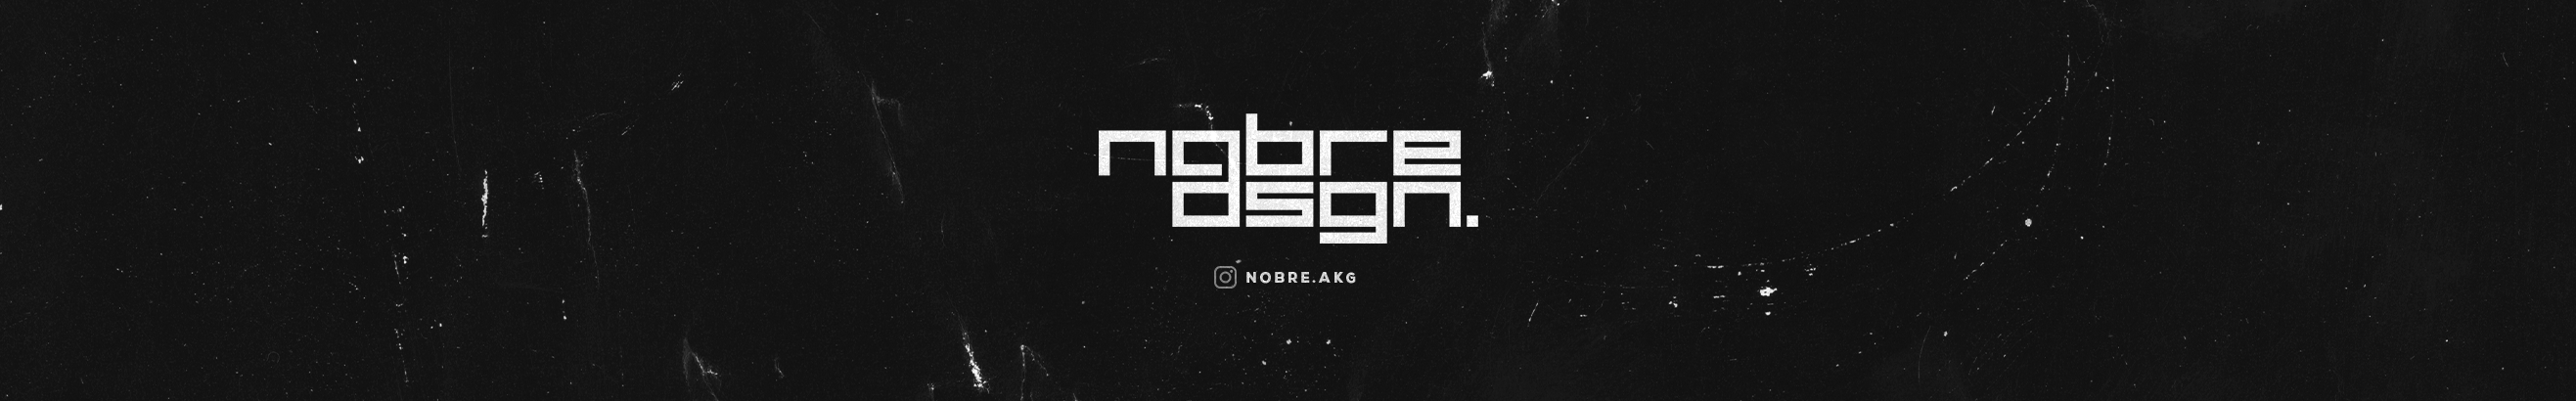 Denilson Nobre's profile banner